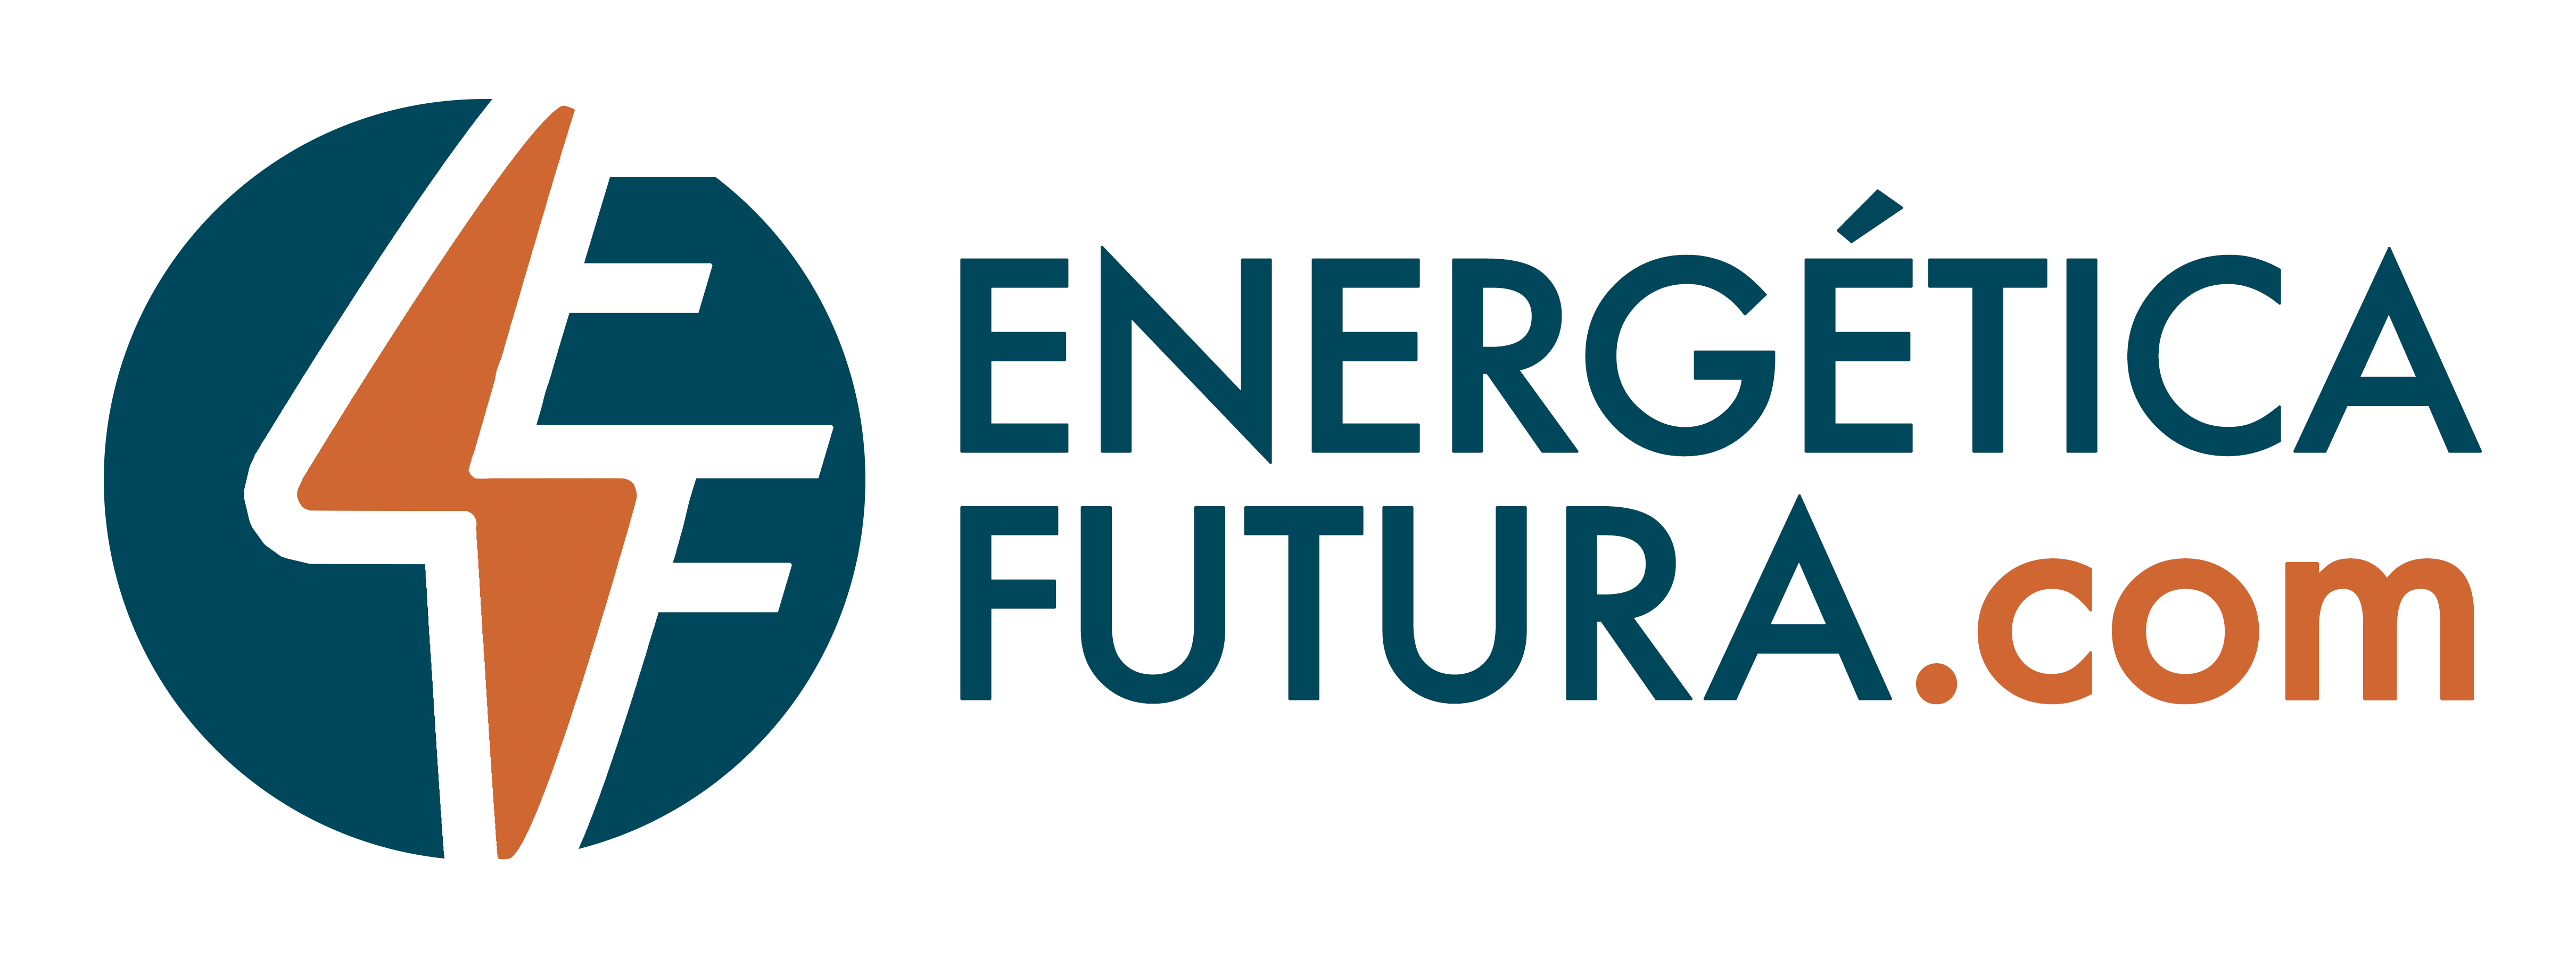 (c) Energeticafutura.com